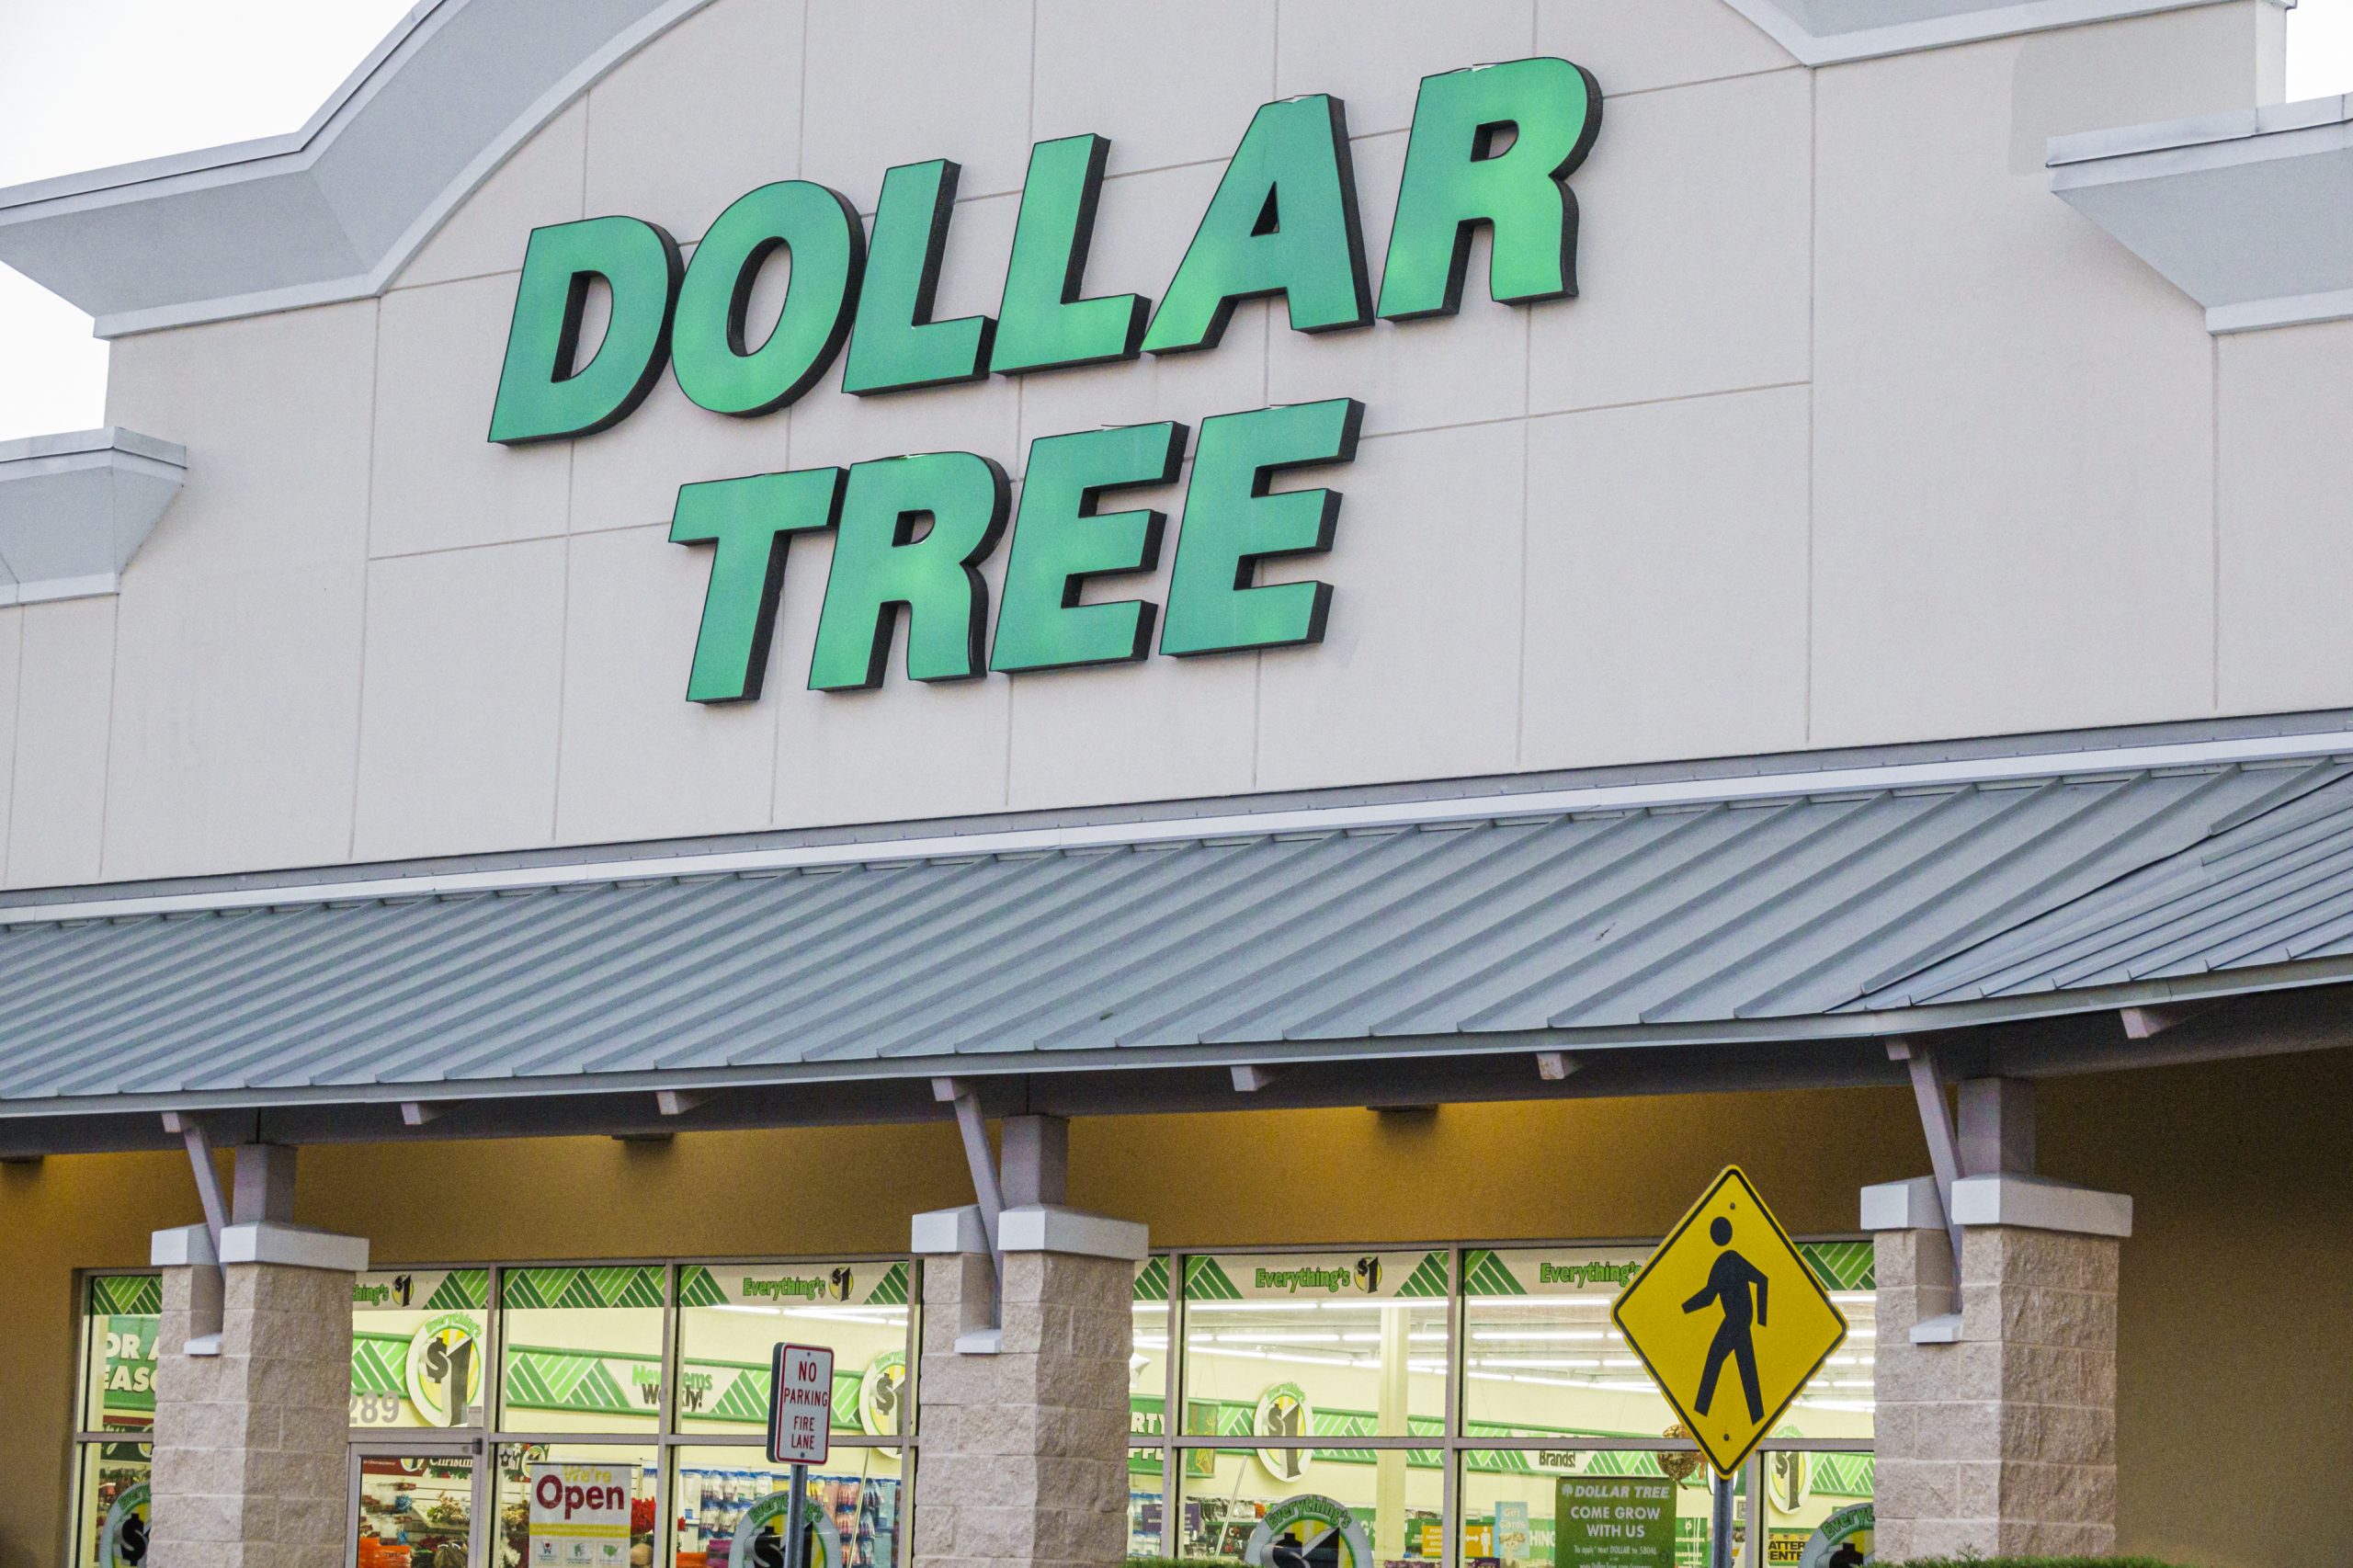 Dollar Tree School Supply Organizers Just $1.25